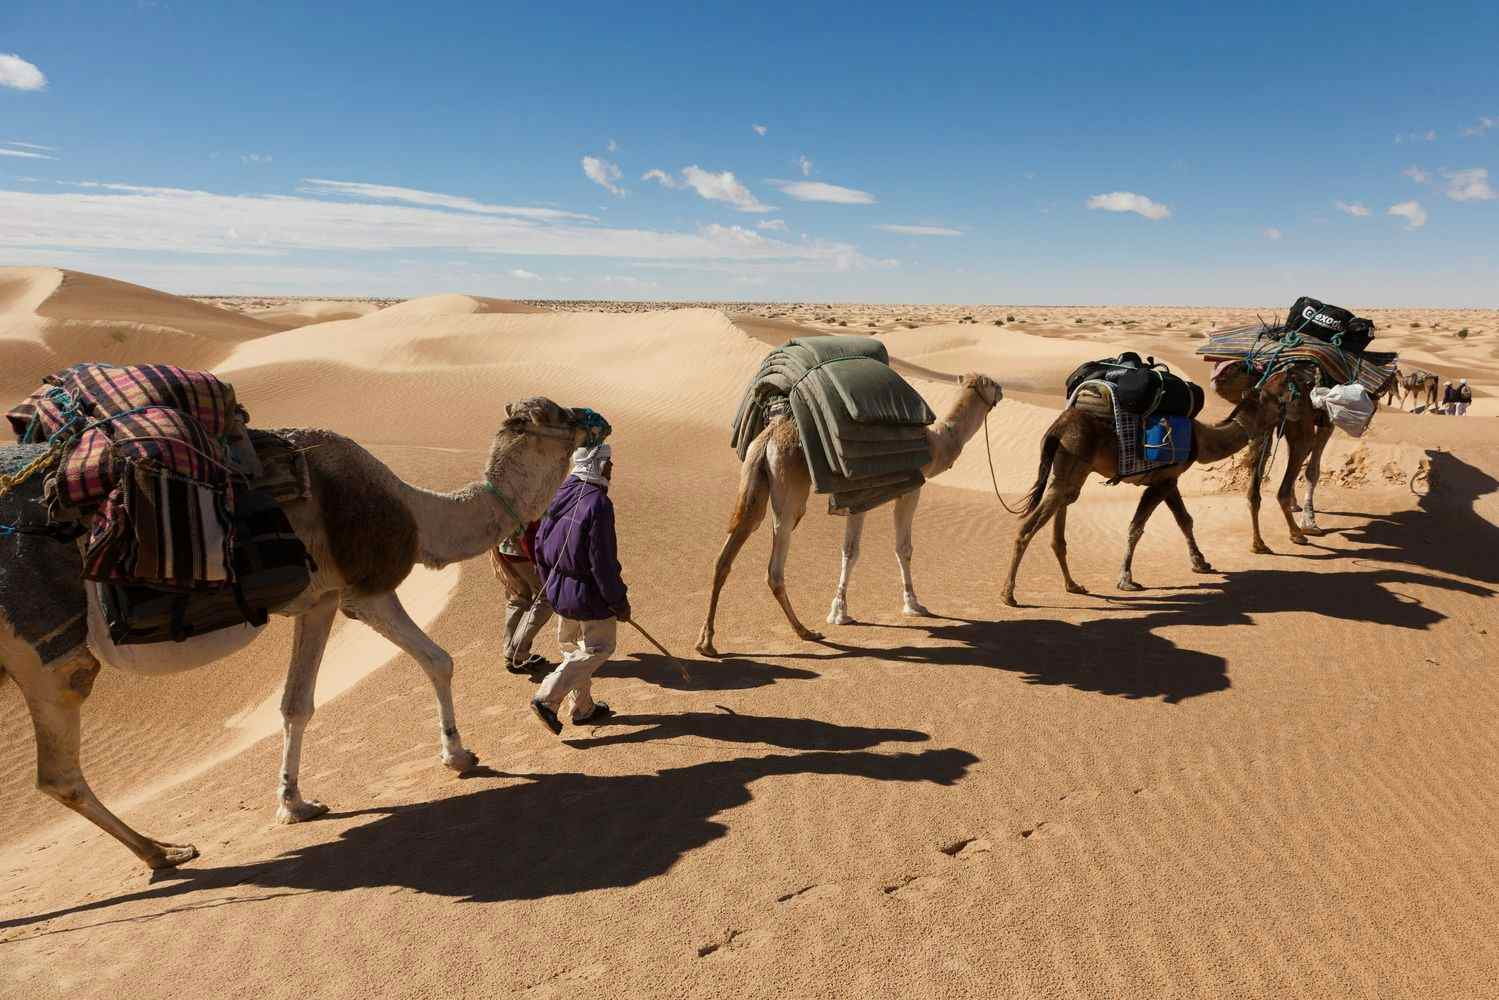 Camel caravan in the Sahara desert, Tunisia.